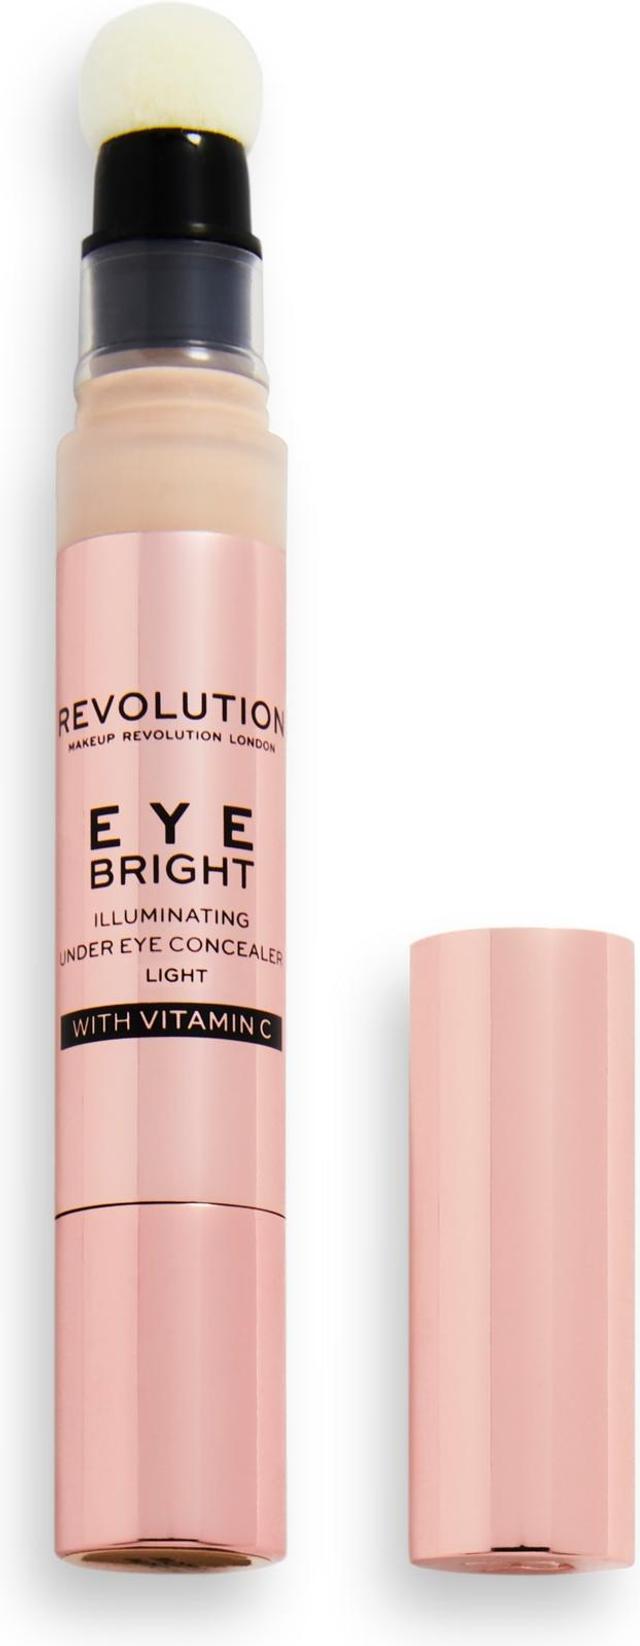 Makeup Revolution Eye Bright Illuminating Under Eye Concealer Light silmänalusvoide  2,9 ml neutraalille ihon pohjavärille